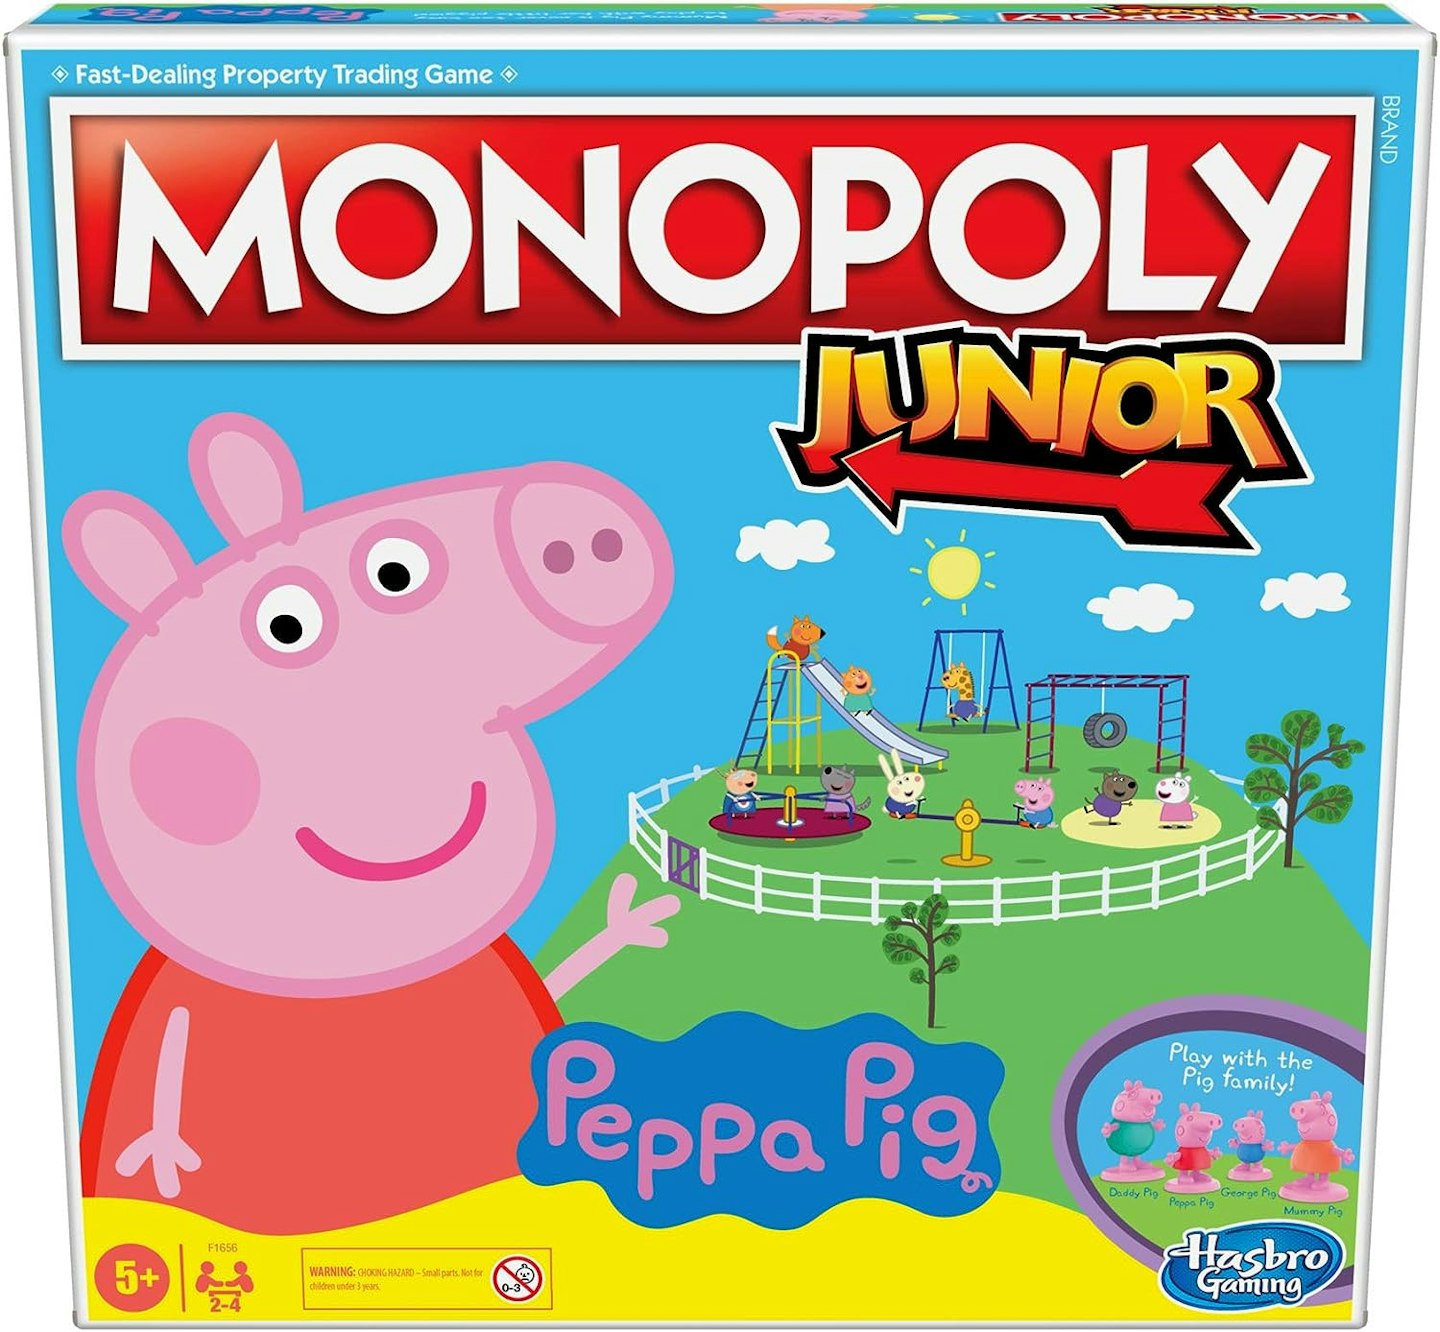 Monopoly Junior Peppa Pig edition